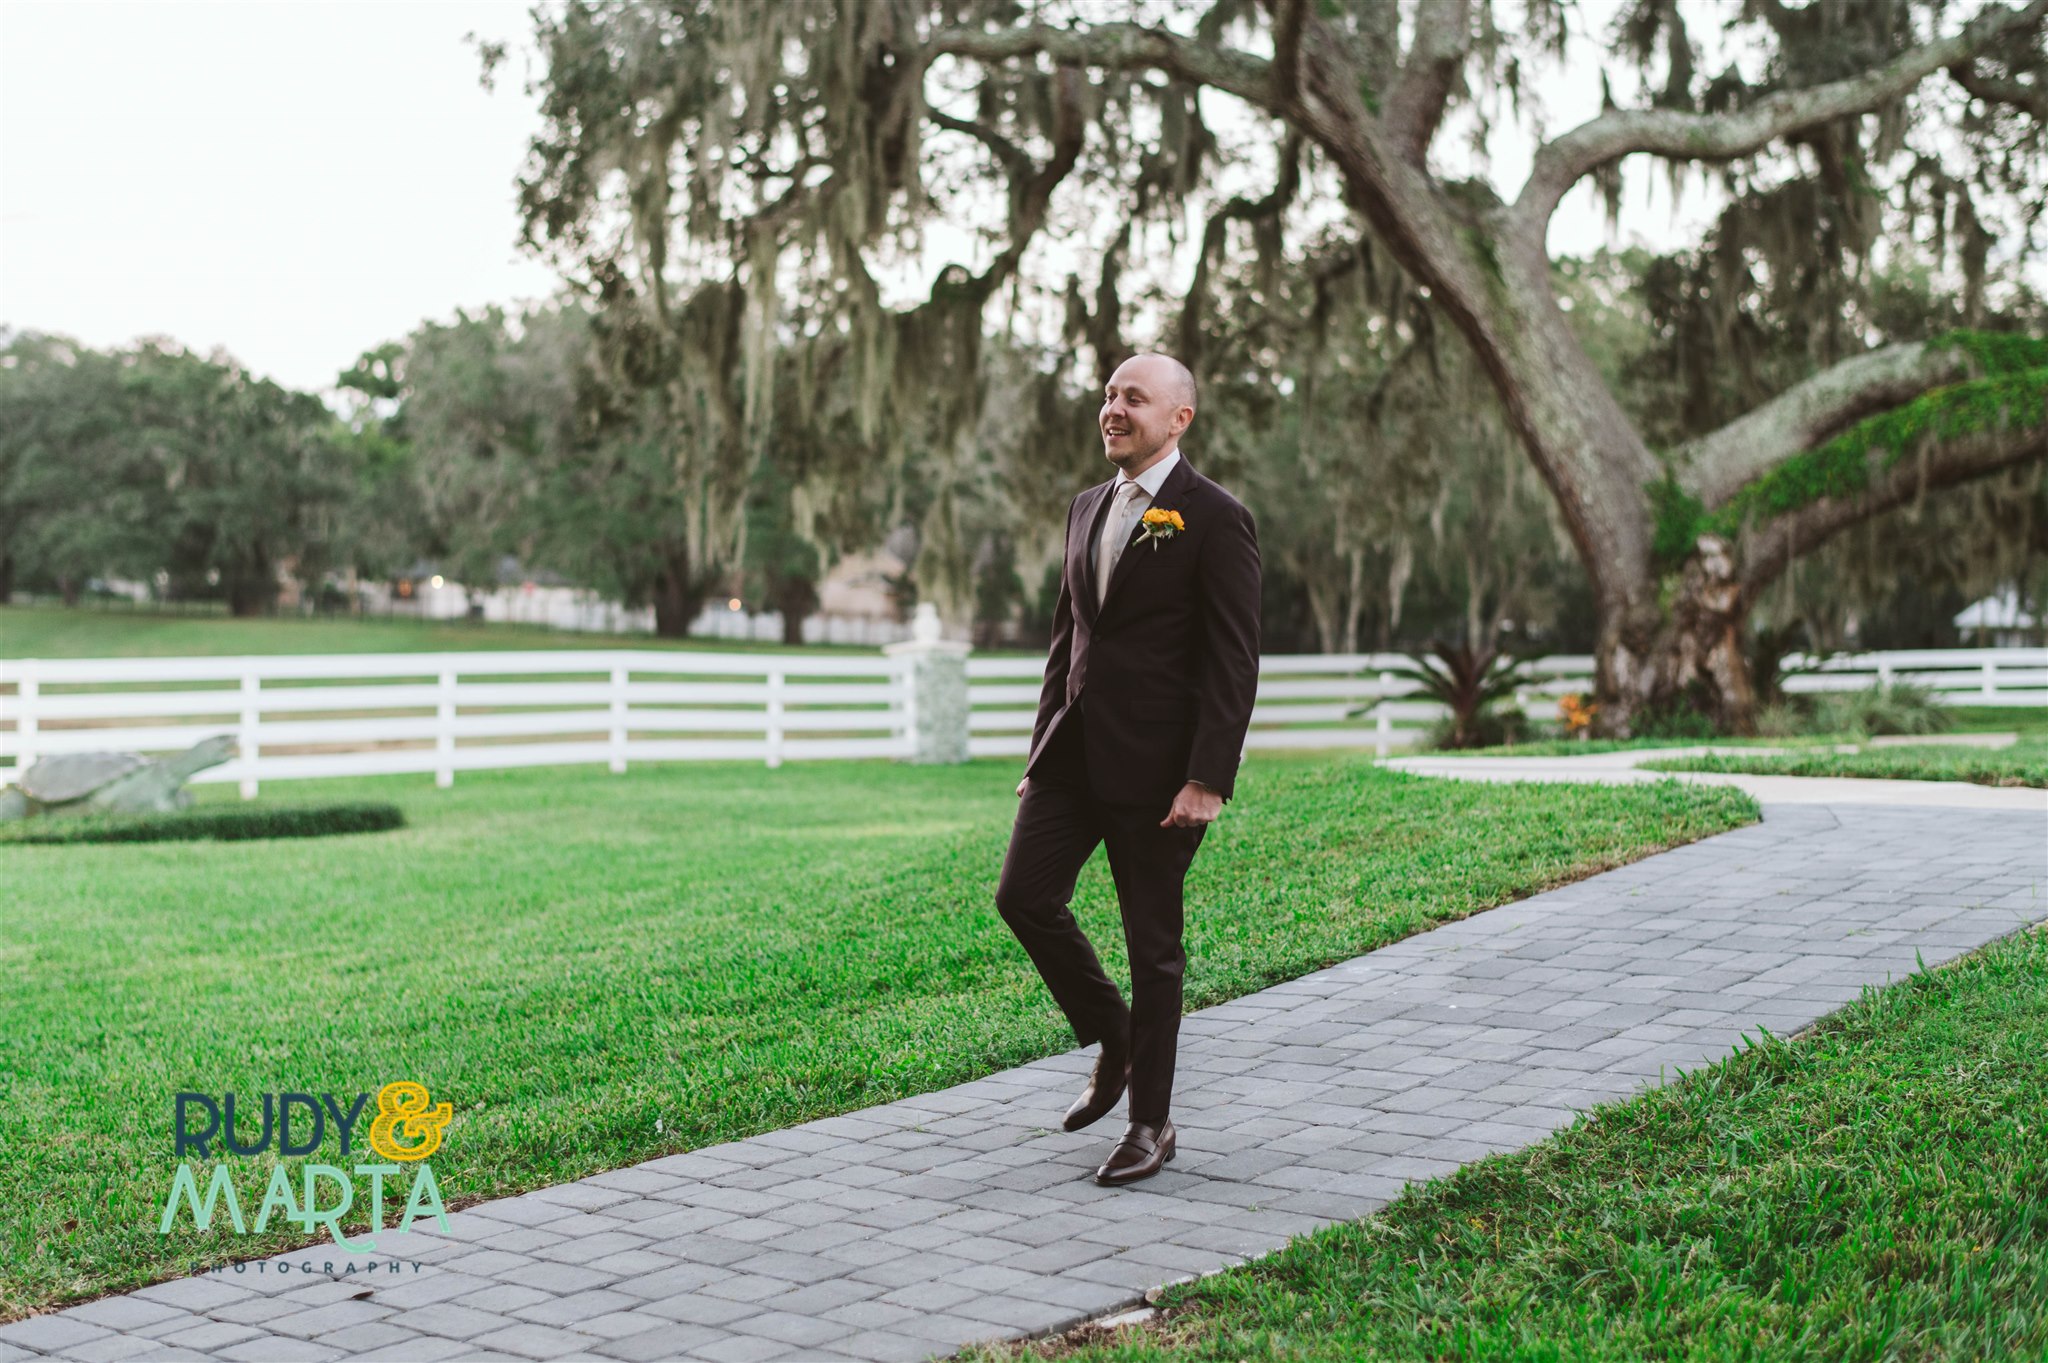 groom at outdoor wedding venue Florida on Socialite Events